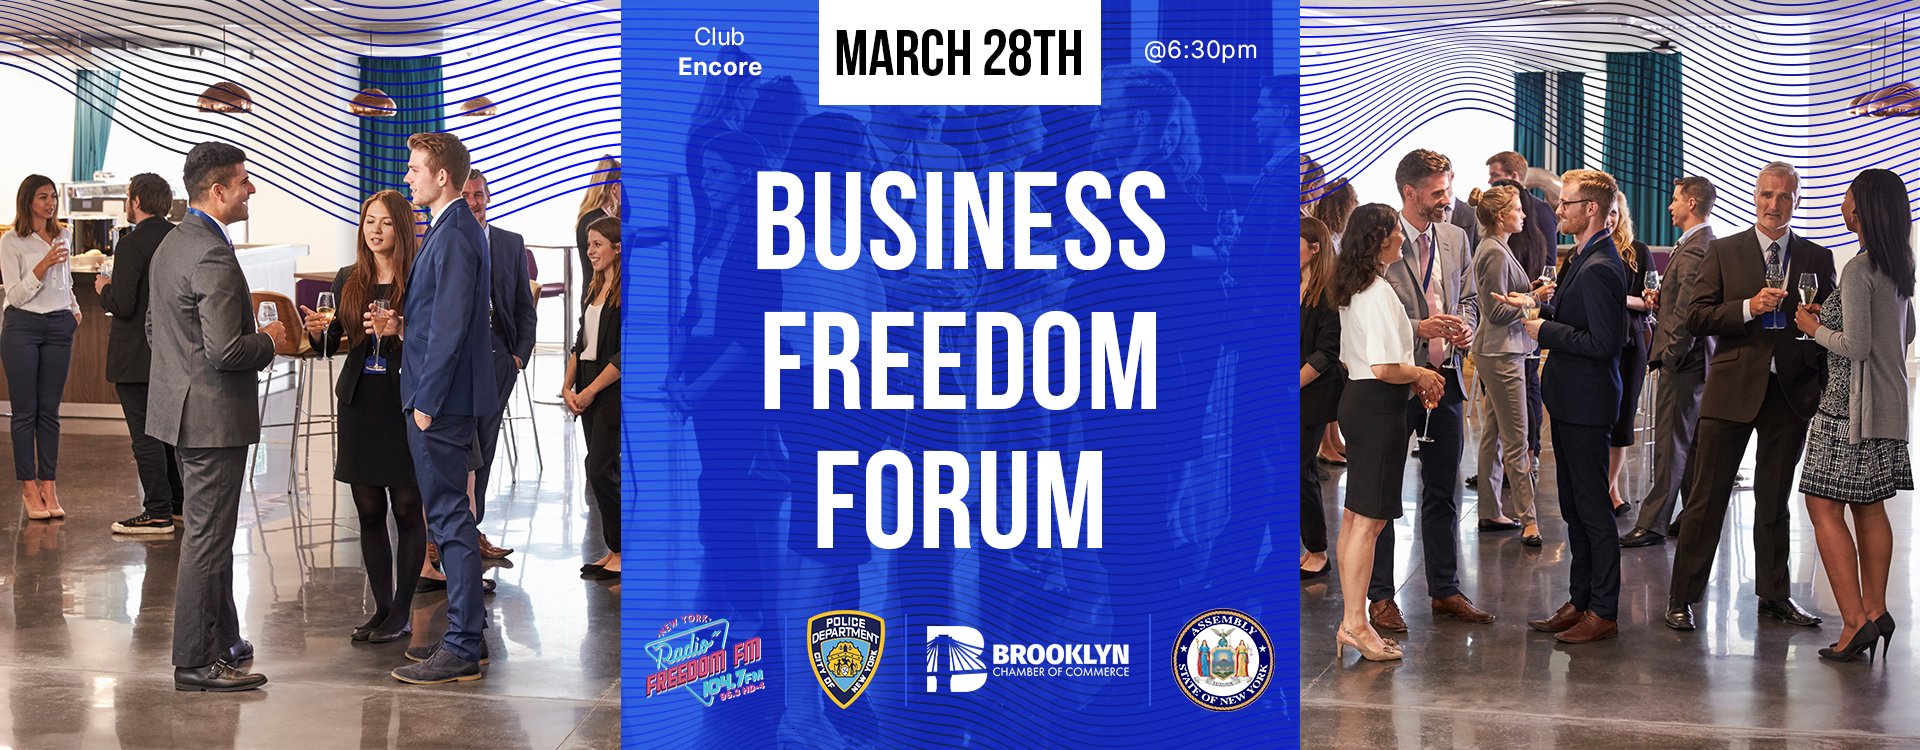 Business Freedom Forum